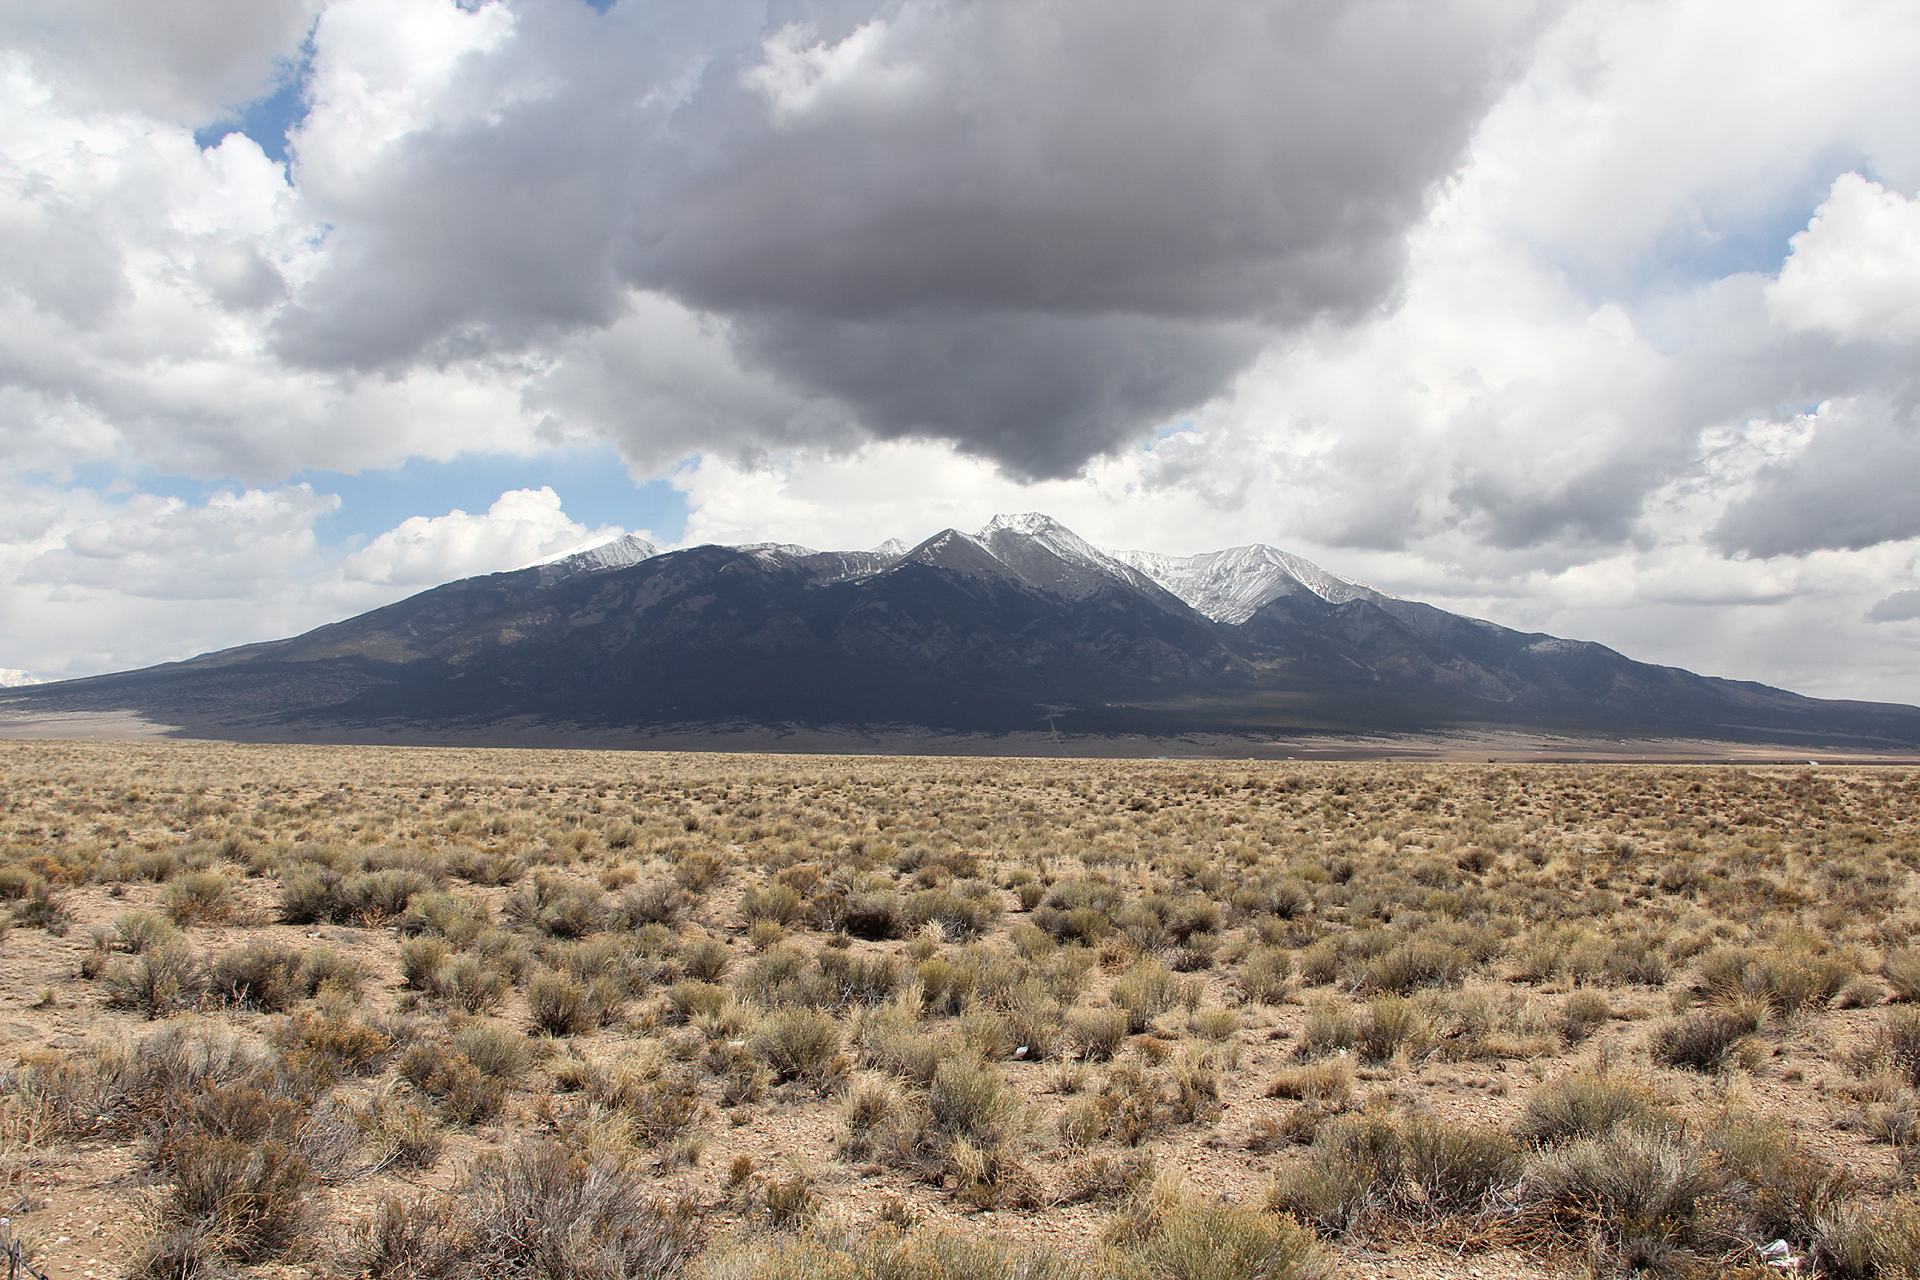 desert scrub in foreground, spiky mountains in background, clouds